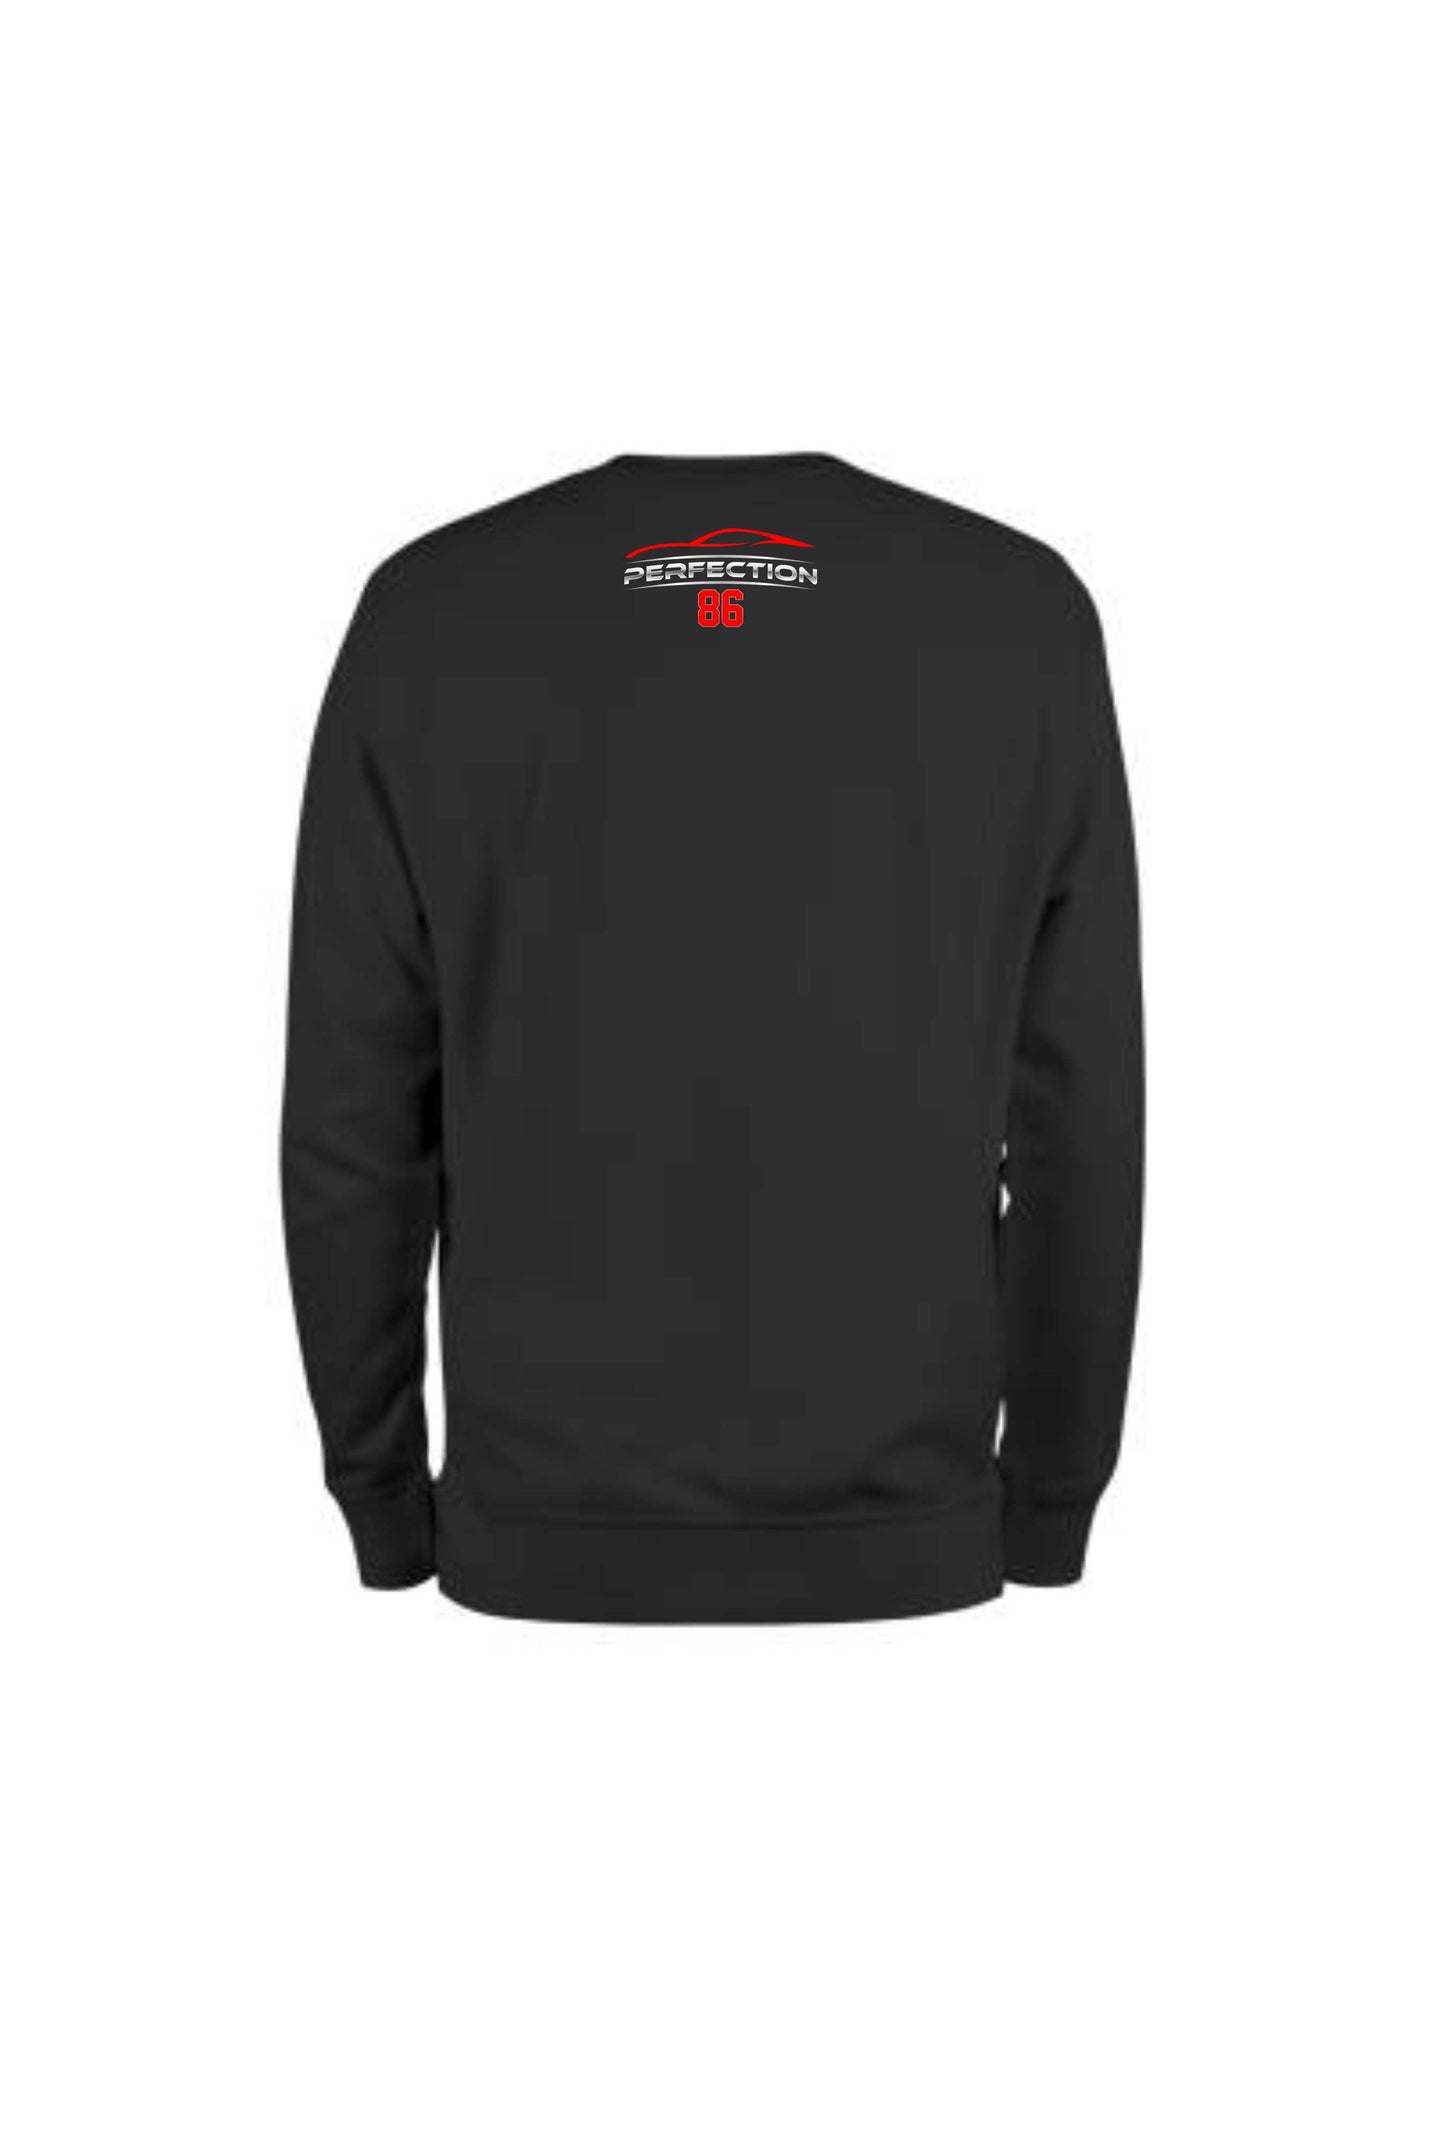 ''Perfection86 E36'' Sweater